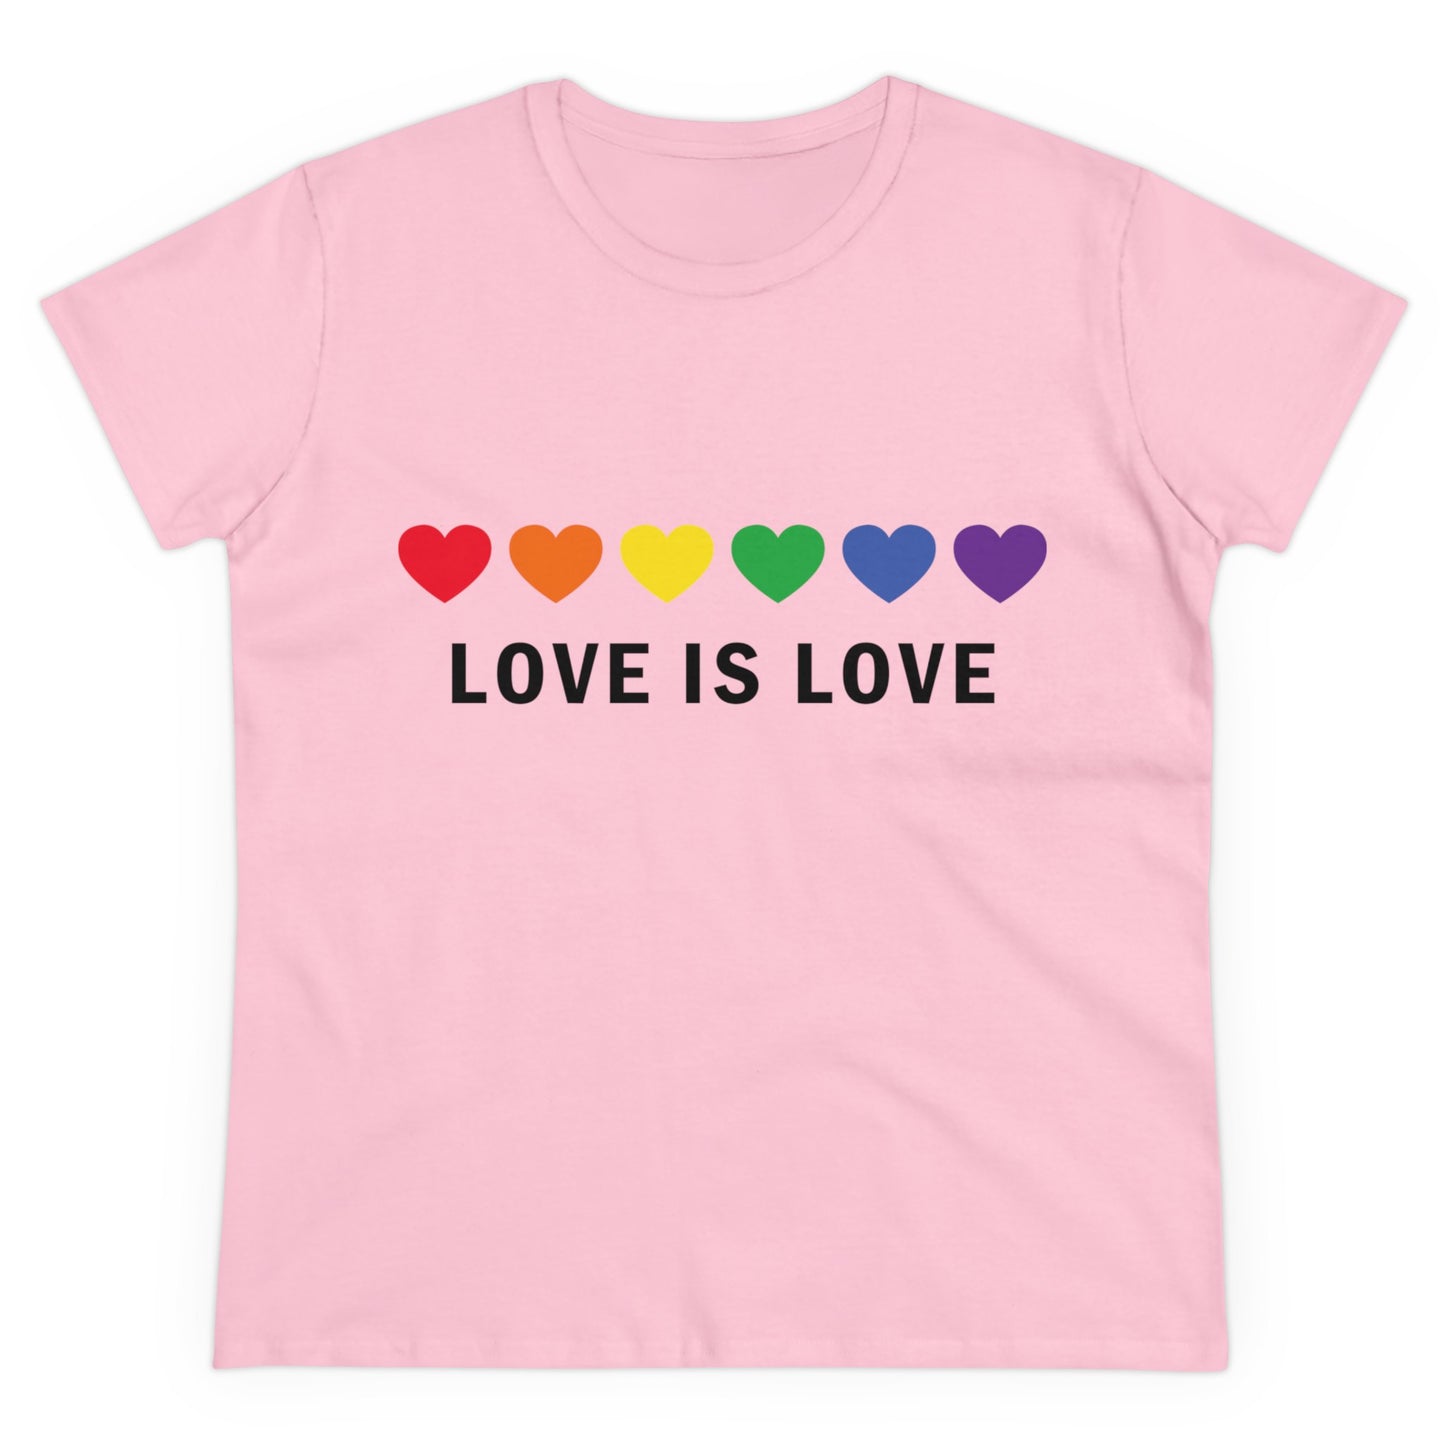 love is love shirt